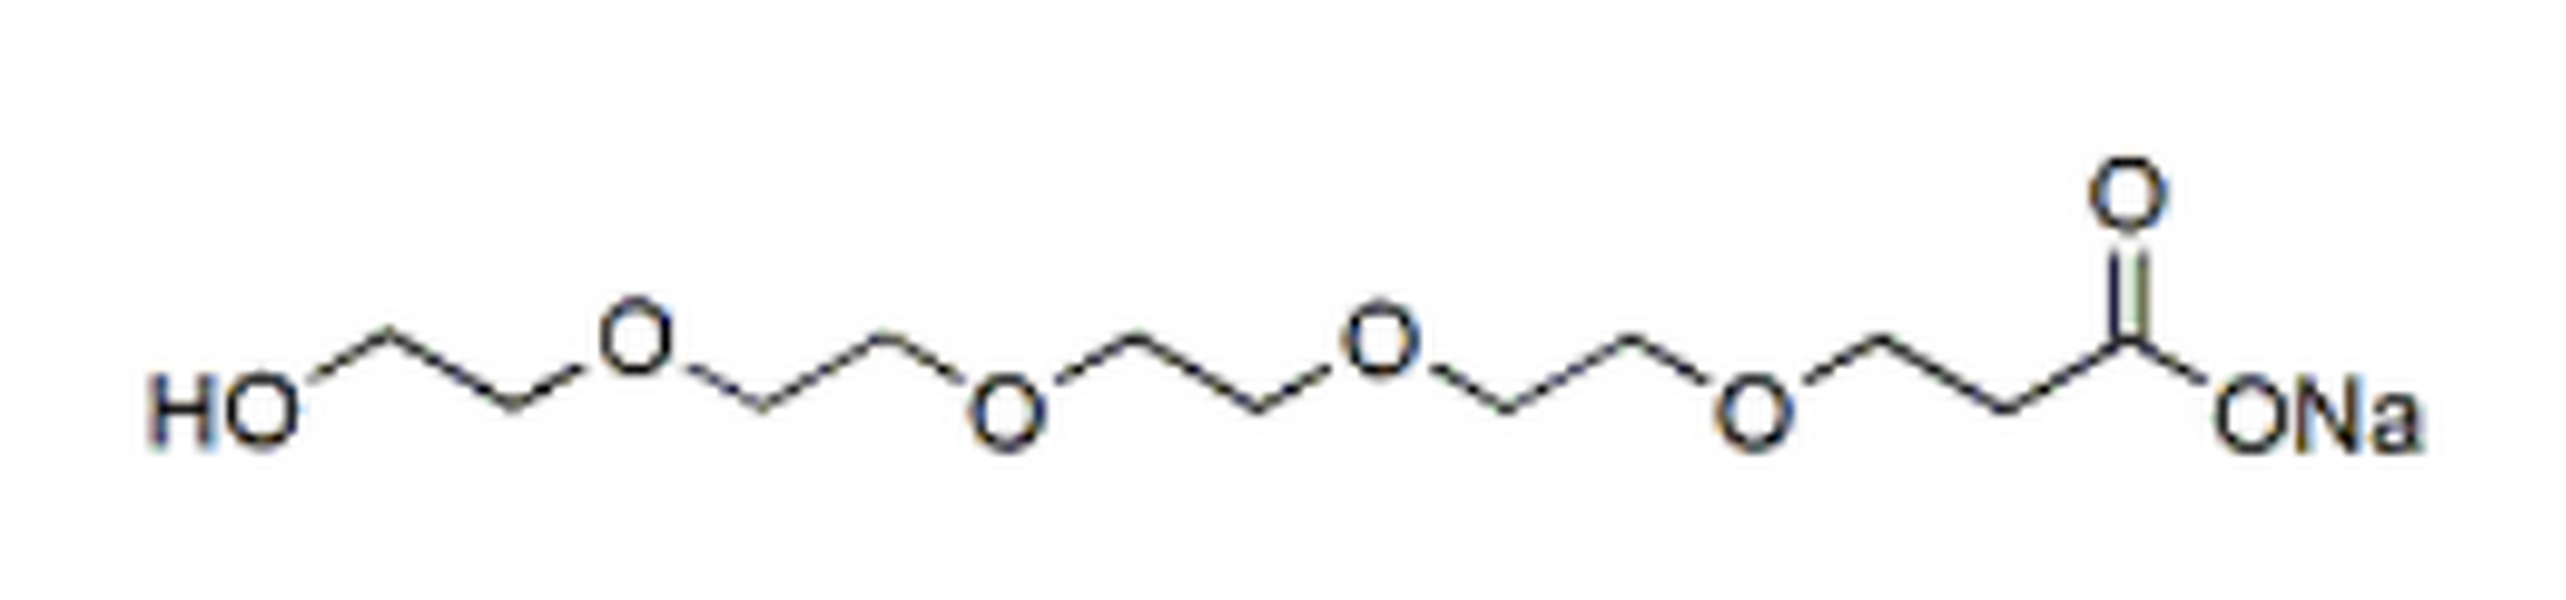 Hydroxy-PEG4-acid sodium salt